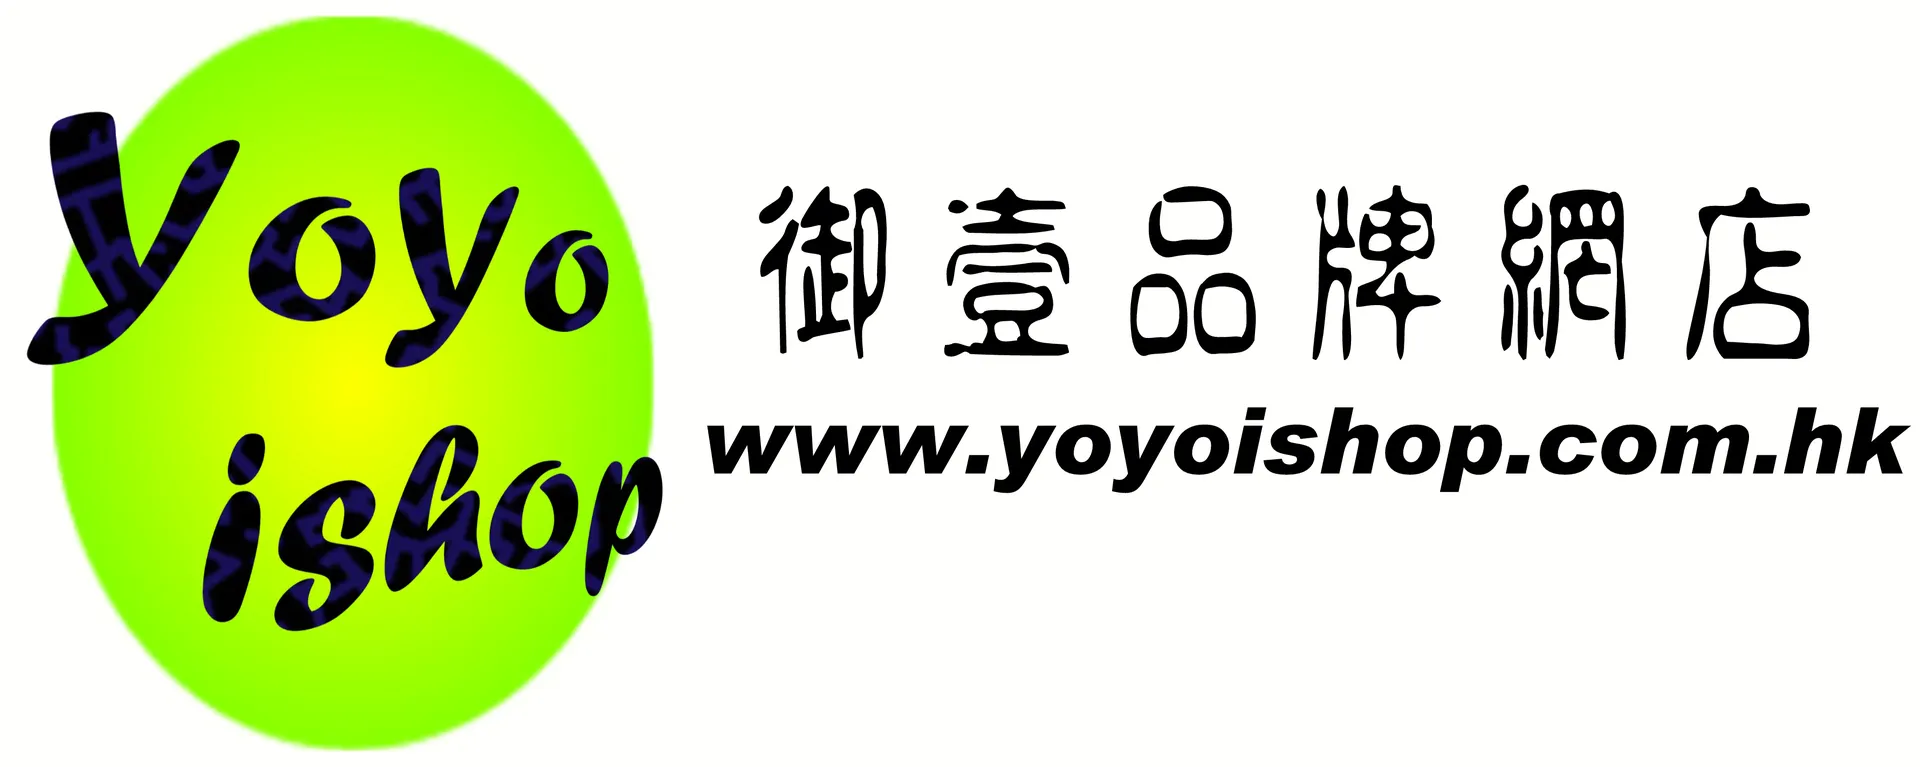 yoyokitchen.com.hk